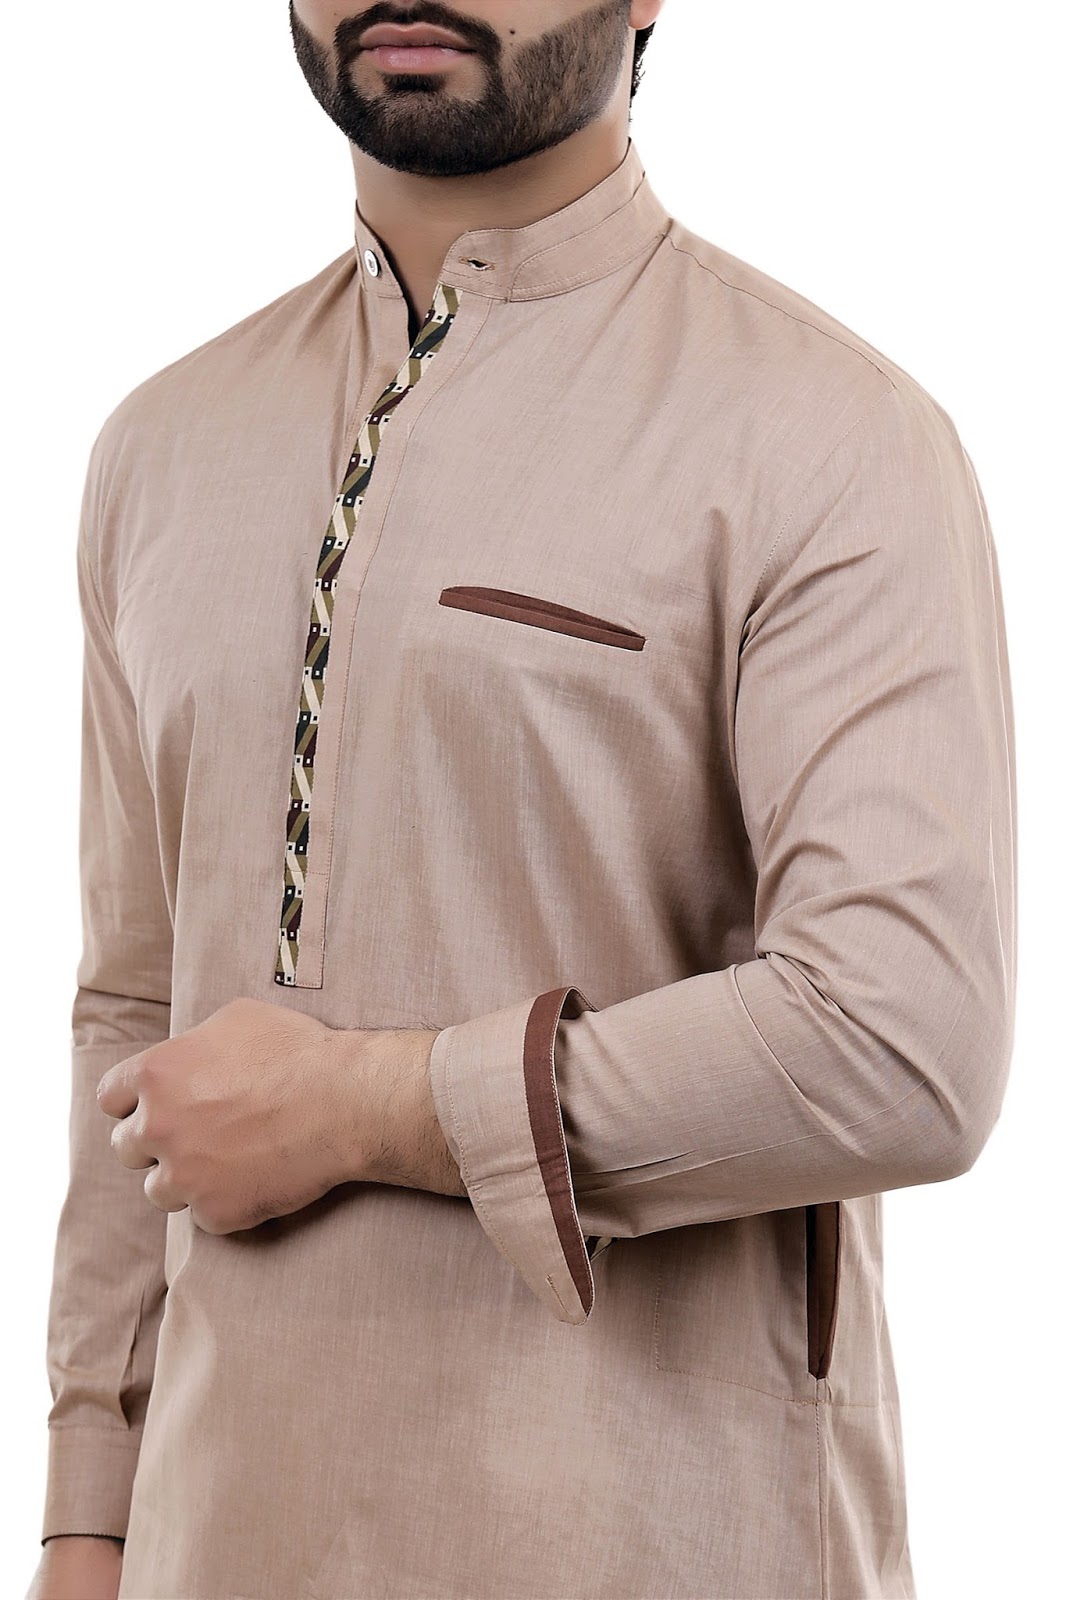 mens shalwar kameez collar designs 2019